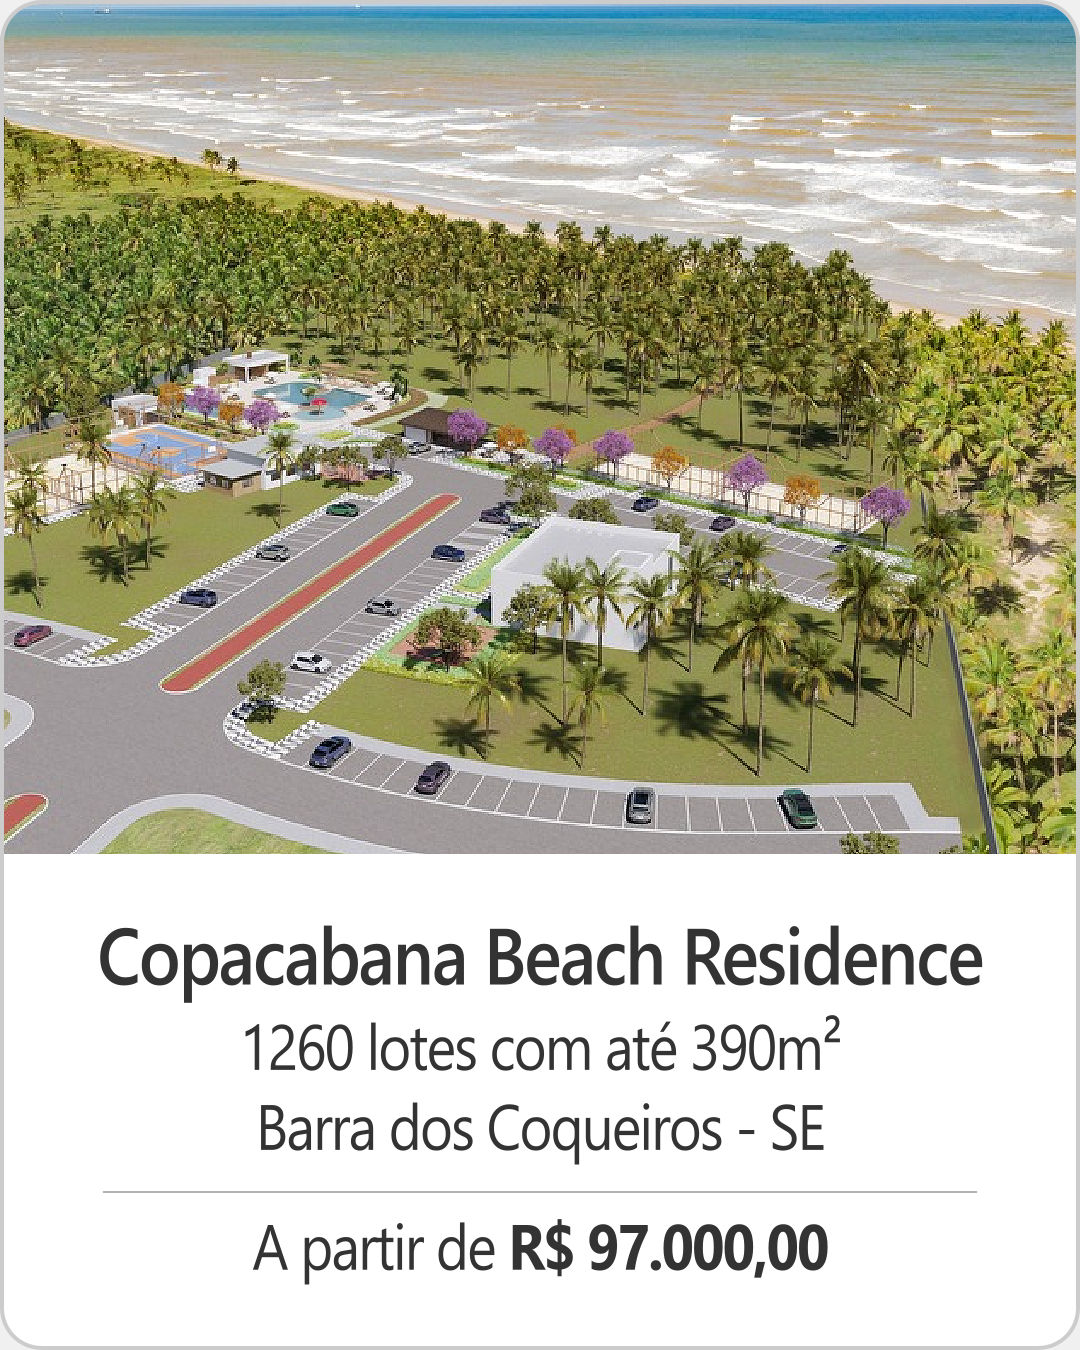 #copacabanabeachresidence